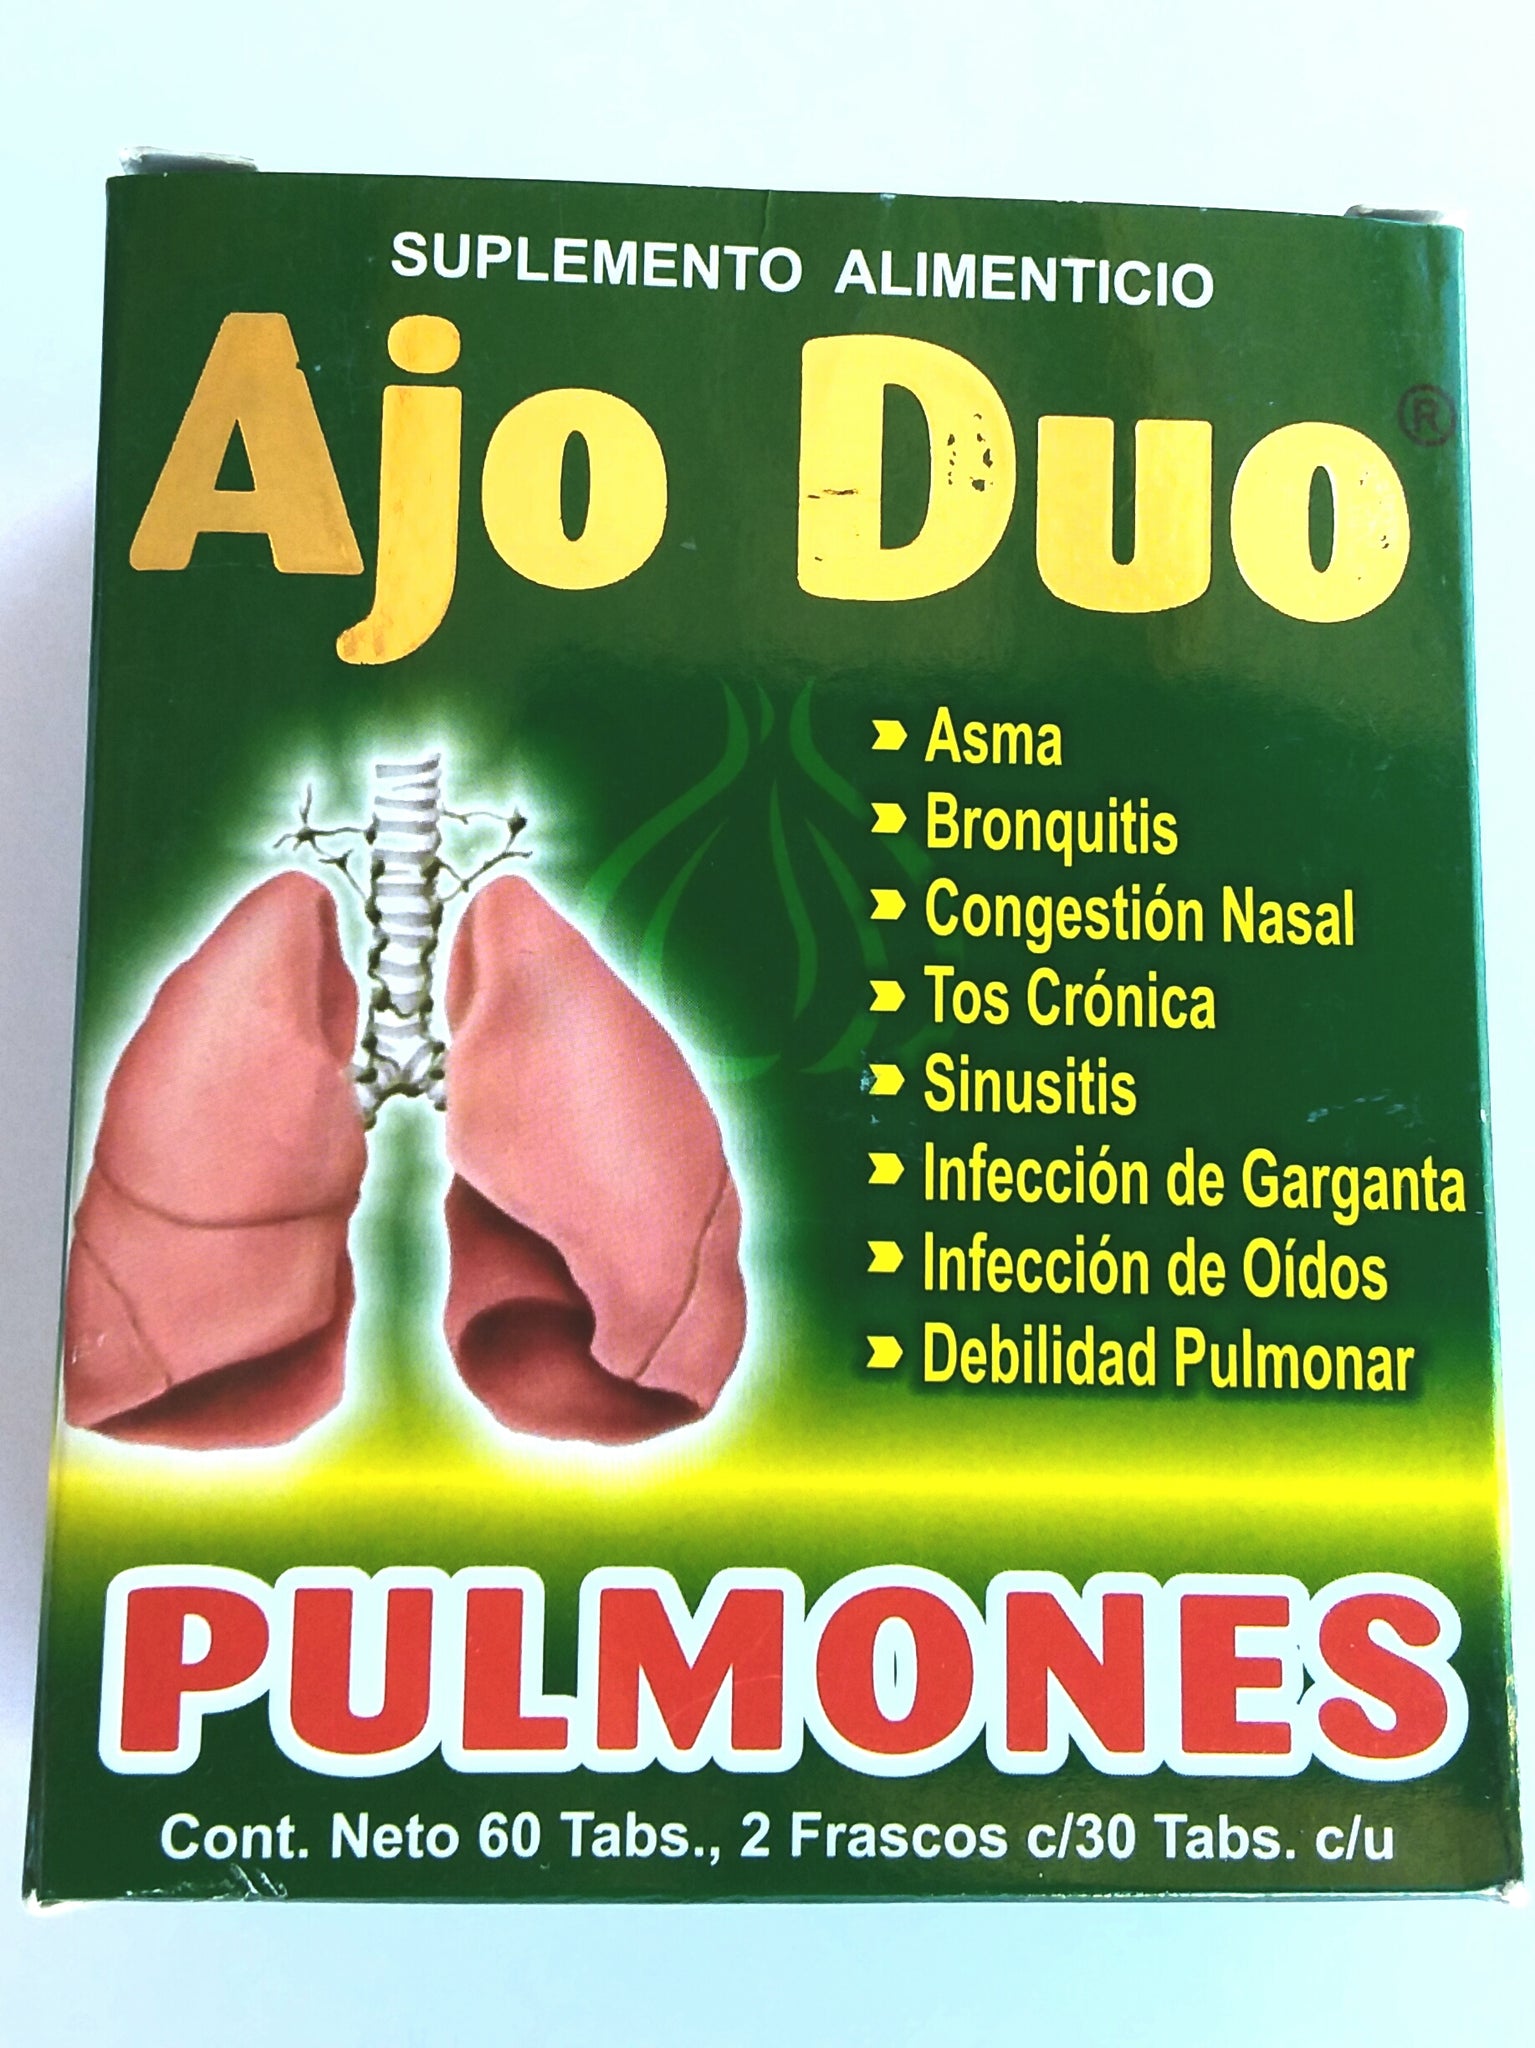 Pulmones Ajo Duo. 60 Tabletas. Lung weakness